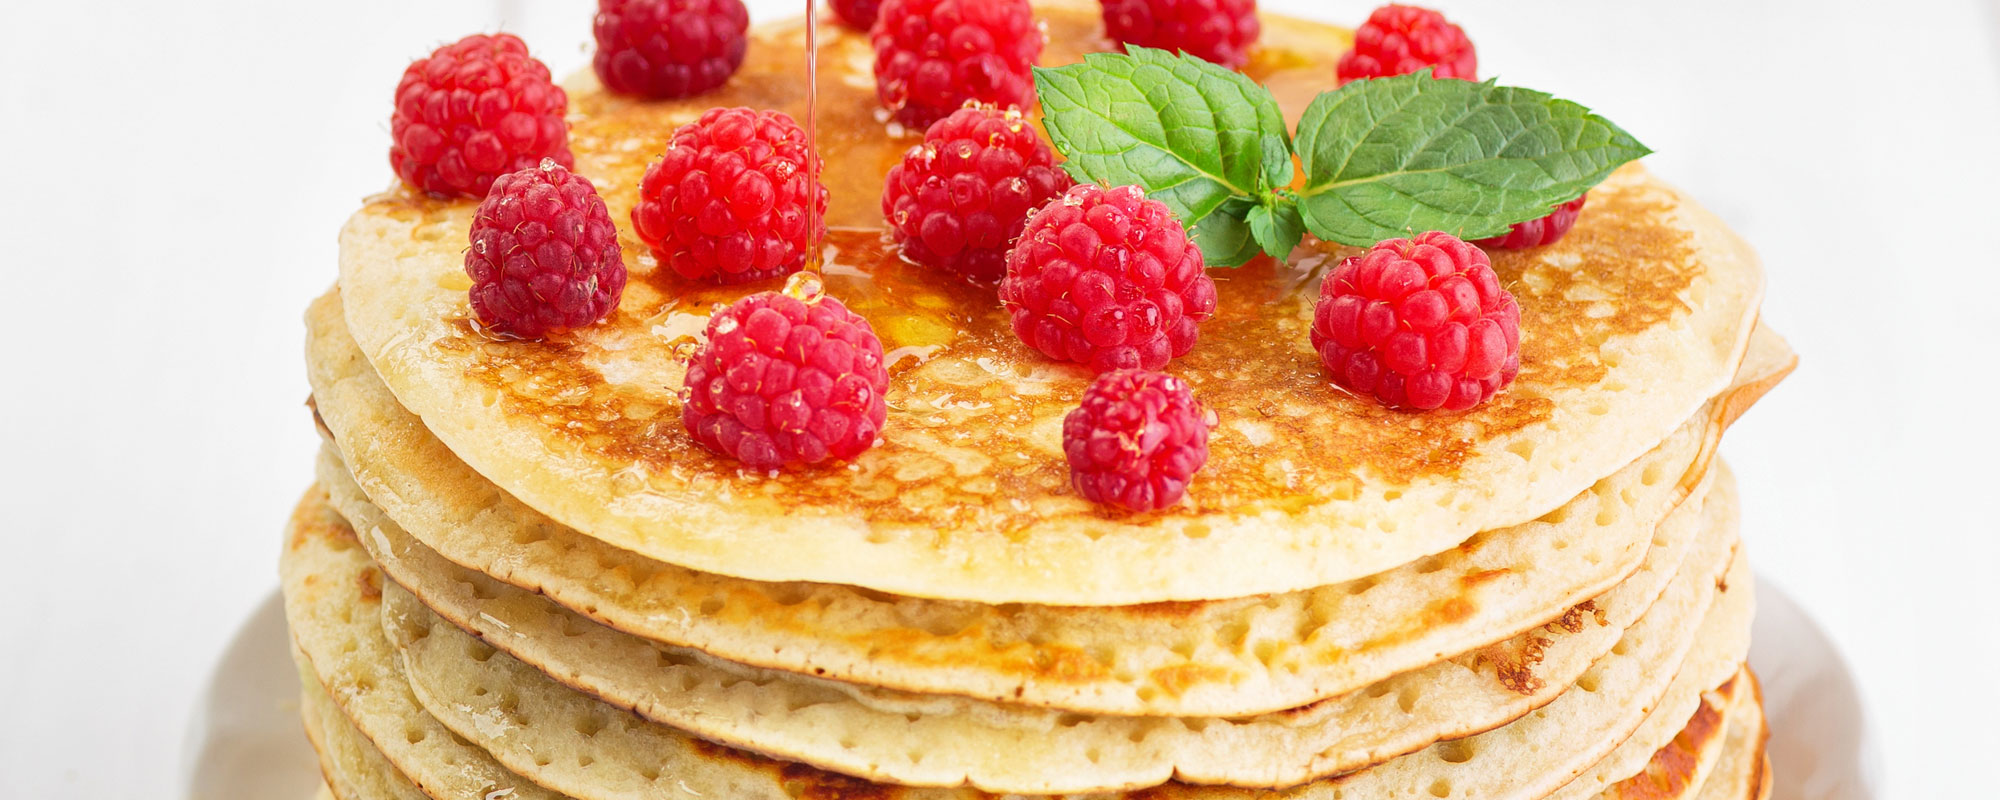 Pancakes With Raspberries from PJ's Pancake House